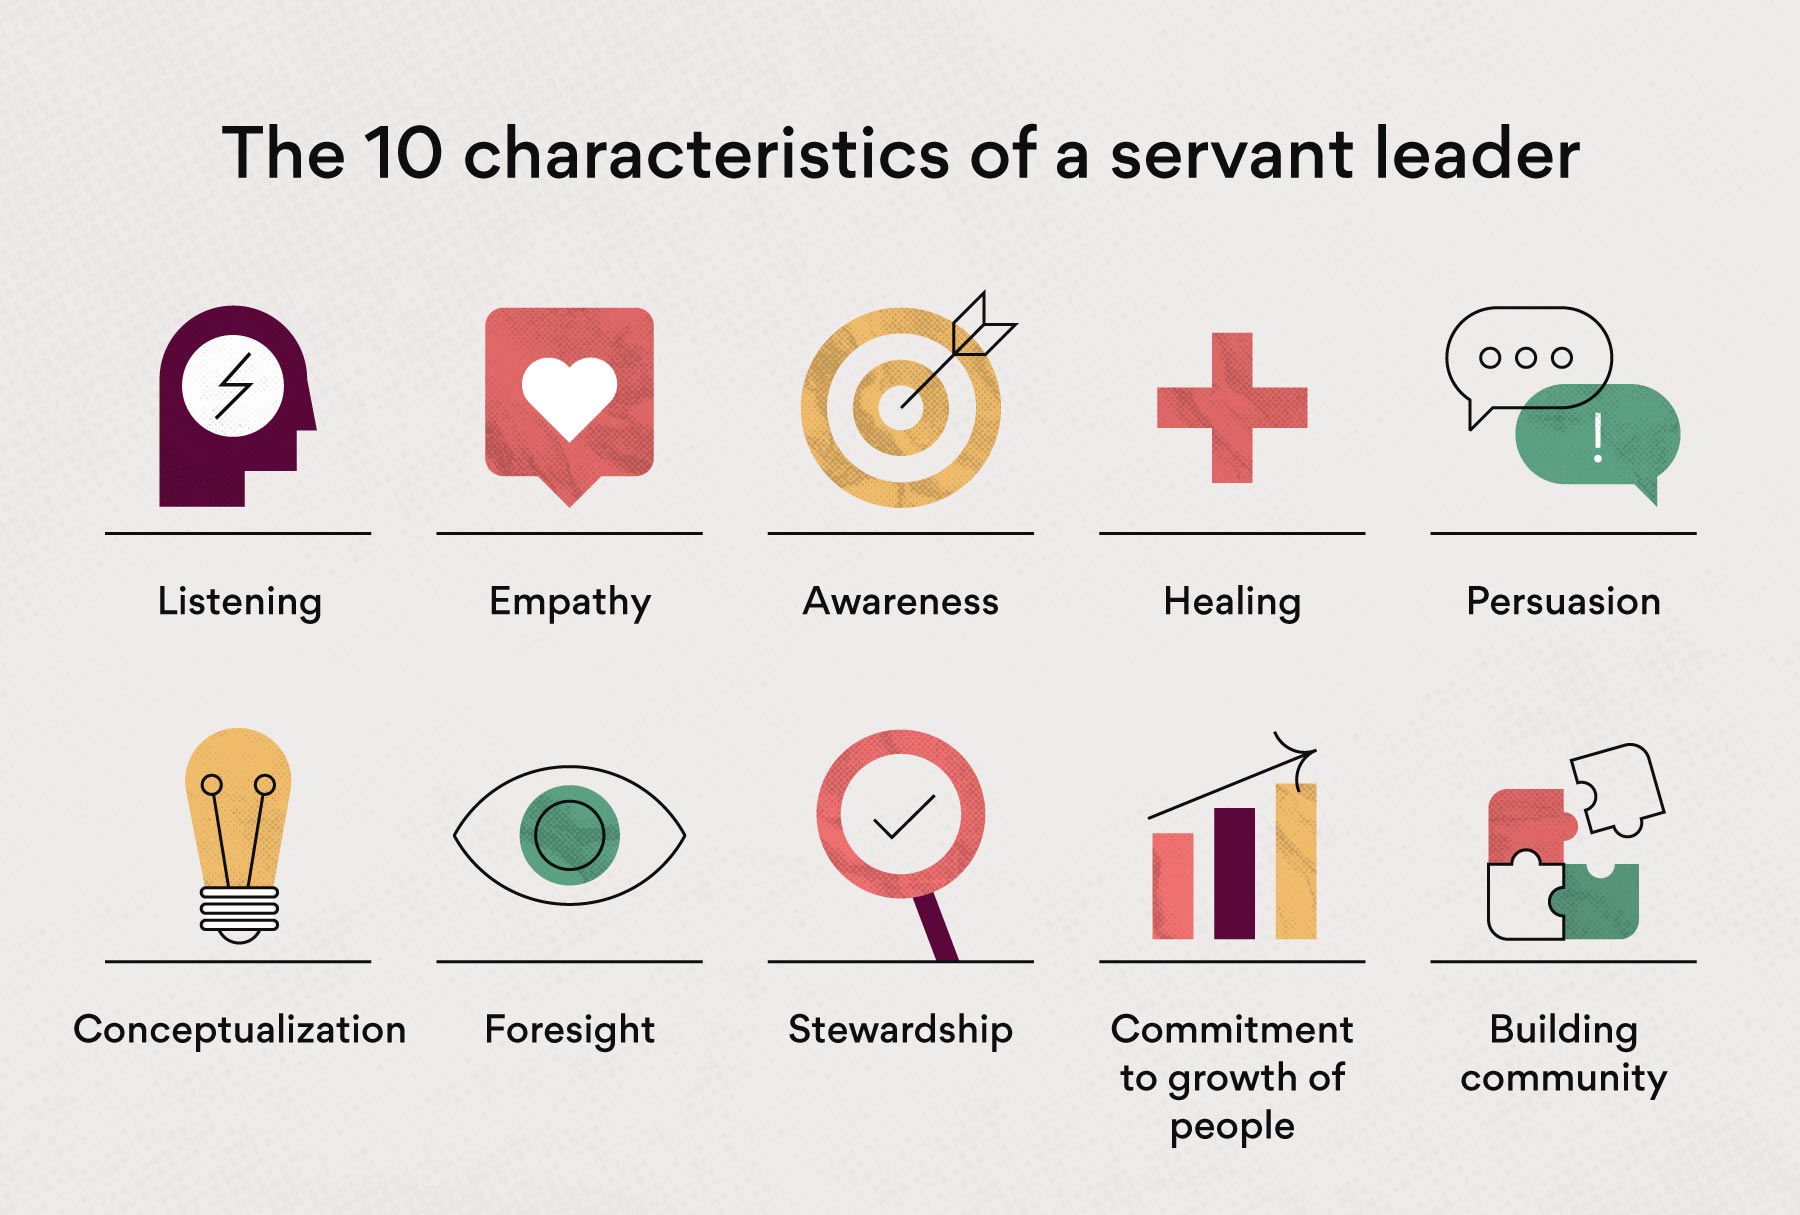 The 10 characteristics of servant leadership